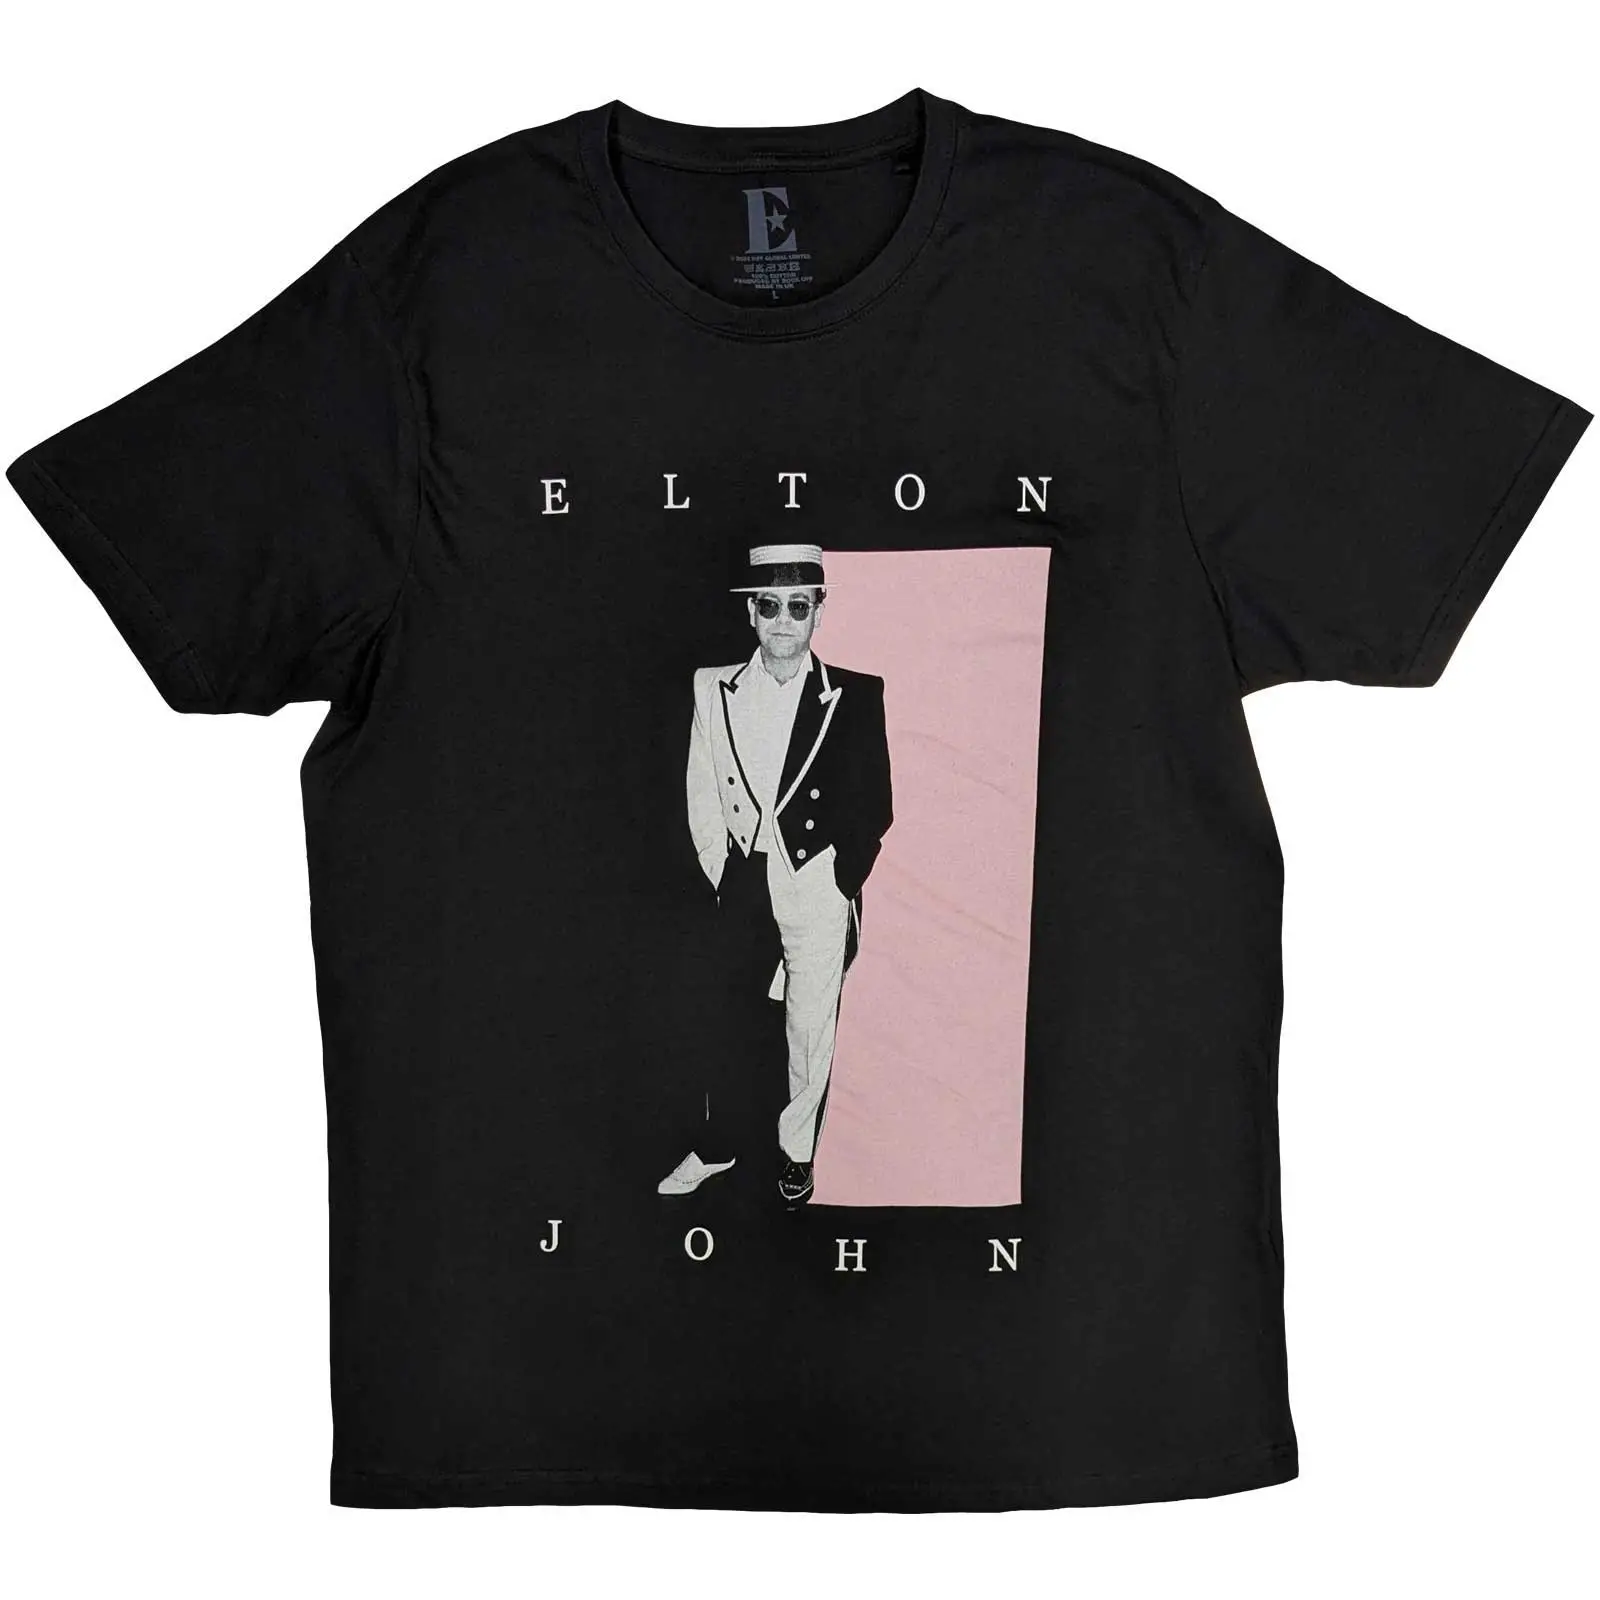 Elton John - Elton John Unisex T-Shirt: Tux Photo  Tux Photo Short Sleeves artwork